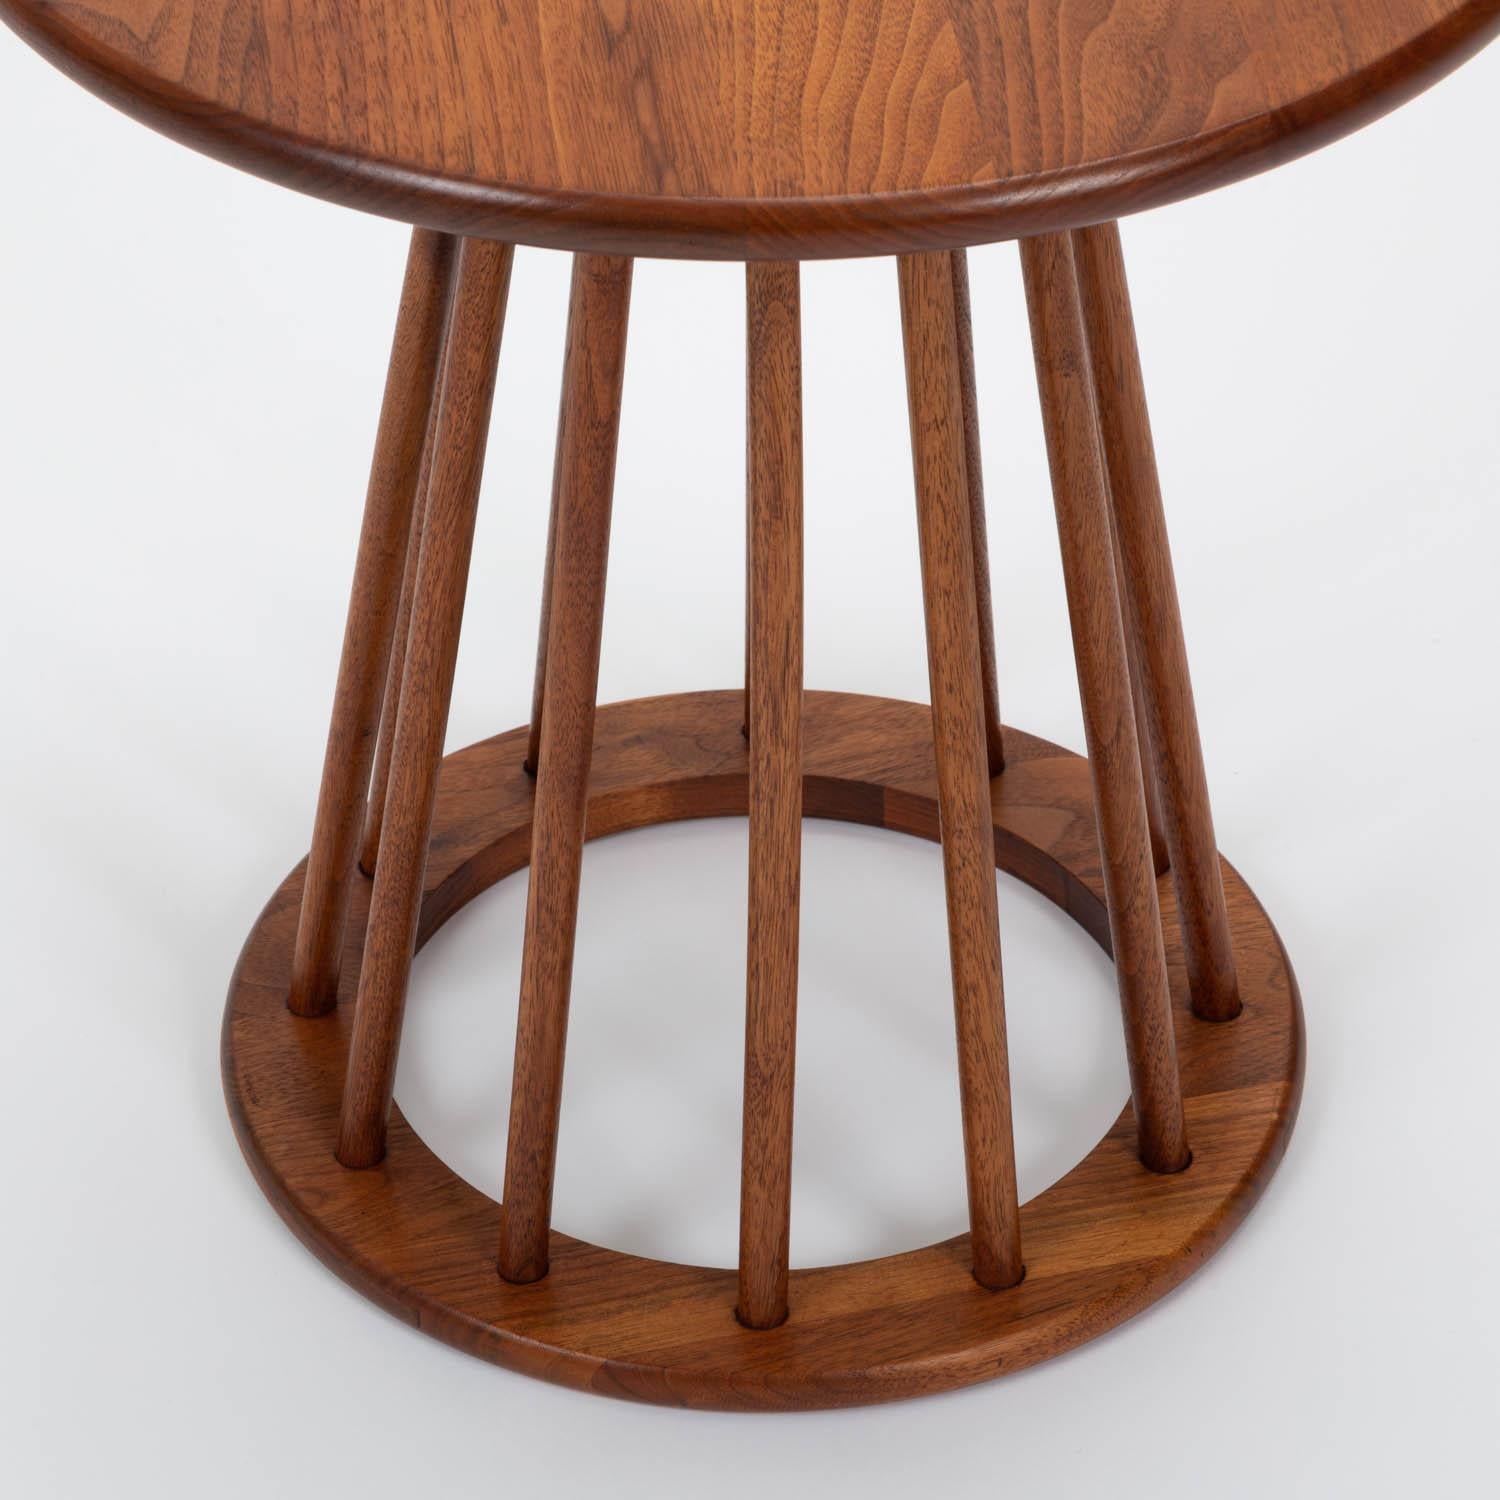 20th Century Pair of Round Walnut Side Tables by Arthur Umanoff for Washington Woodcraft